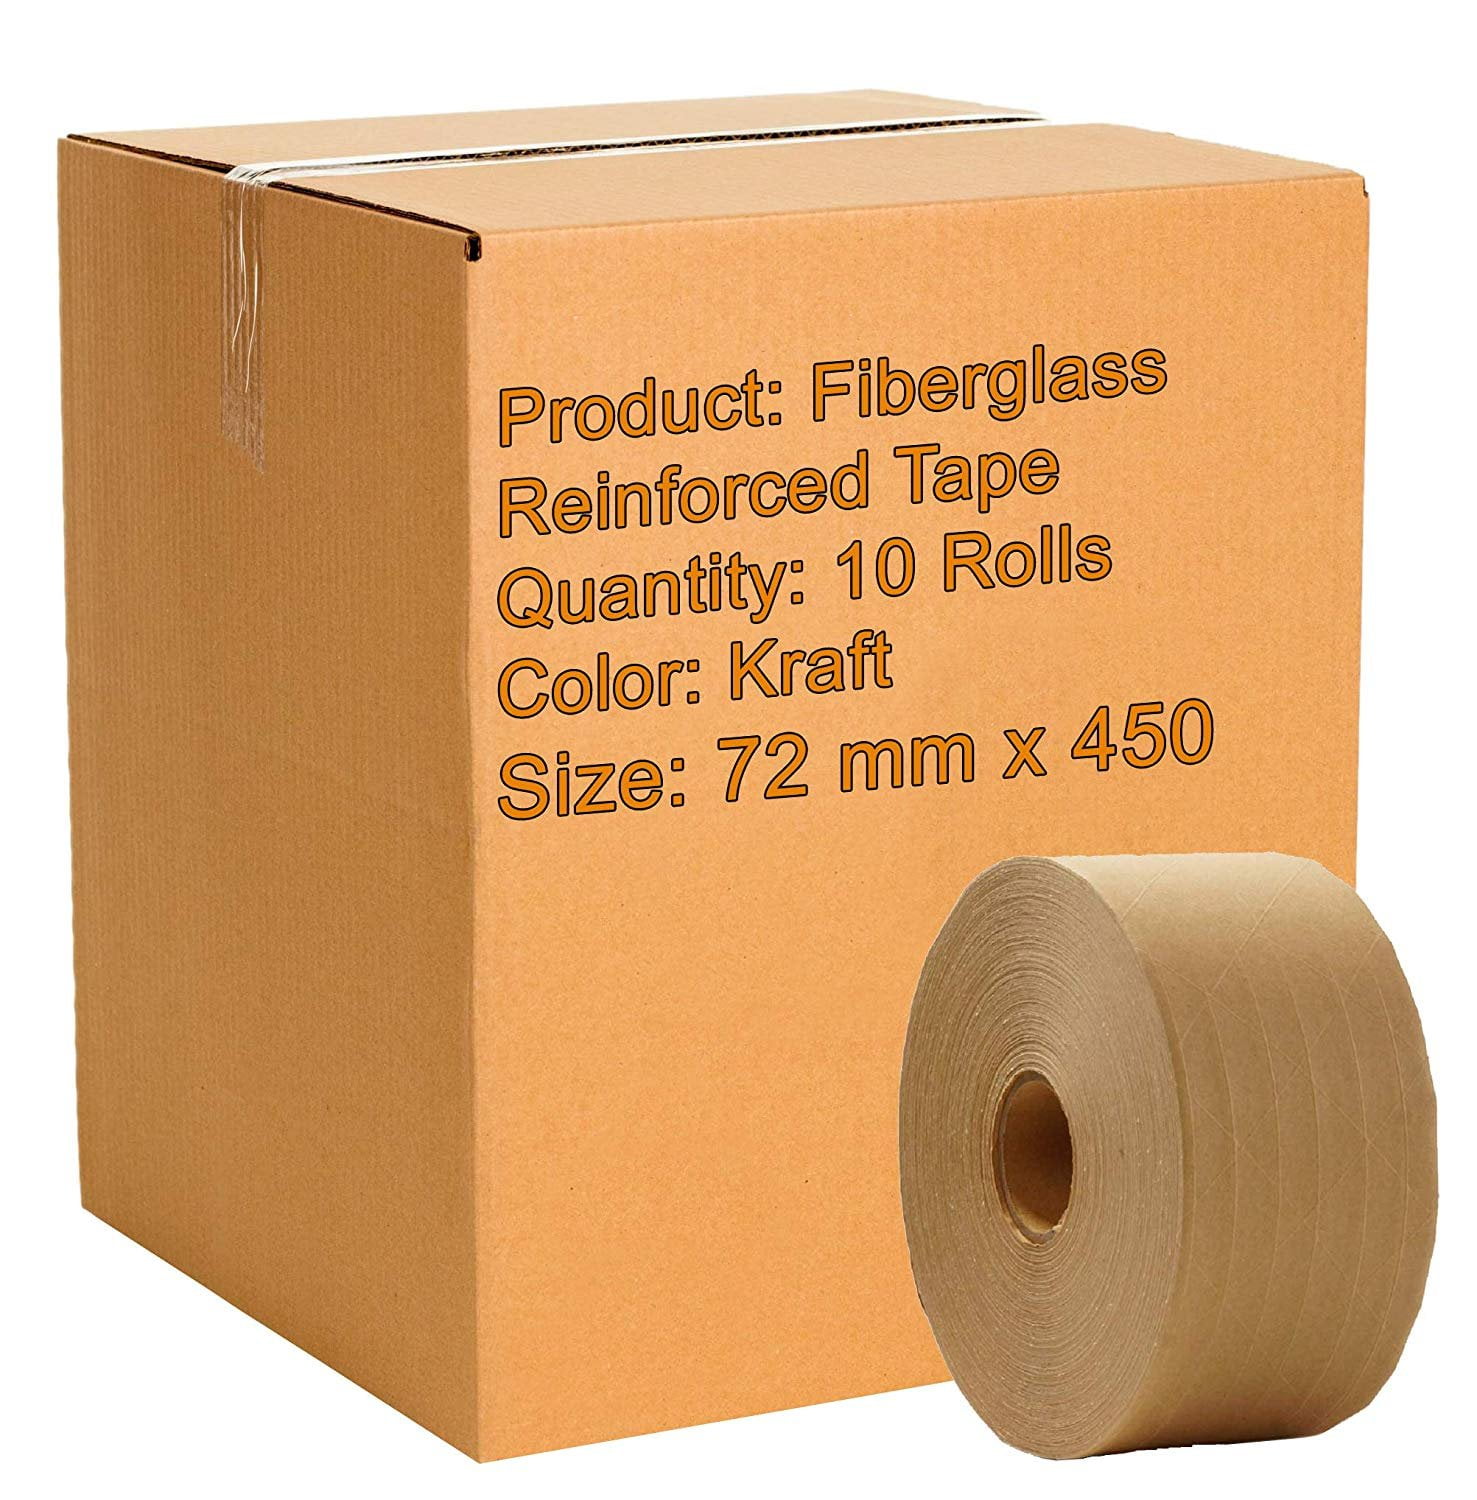 Gummed Tape Reinforced 20 Rolls 72 mm x 450 ft Water-Activated Kraft Paper